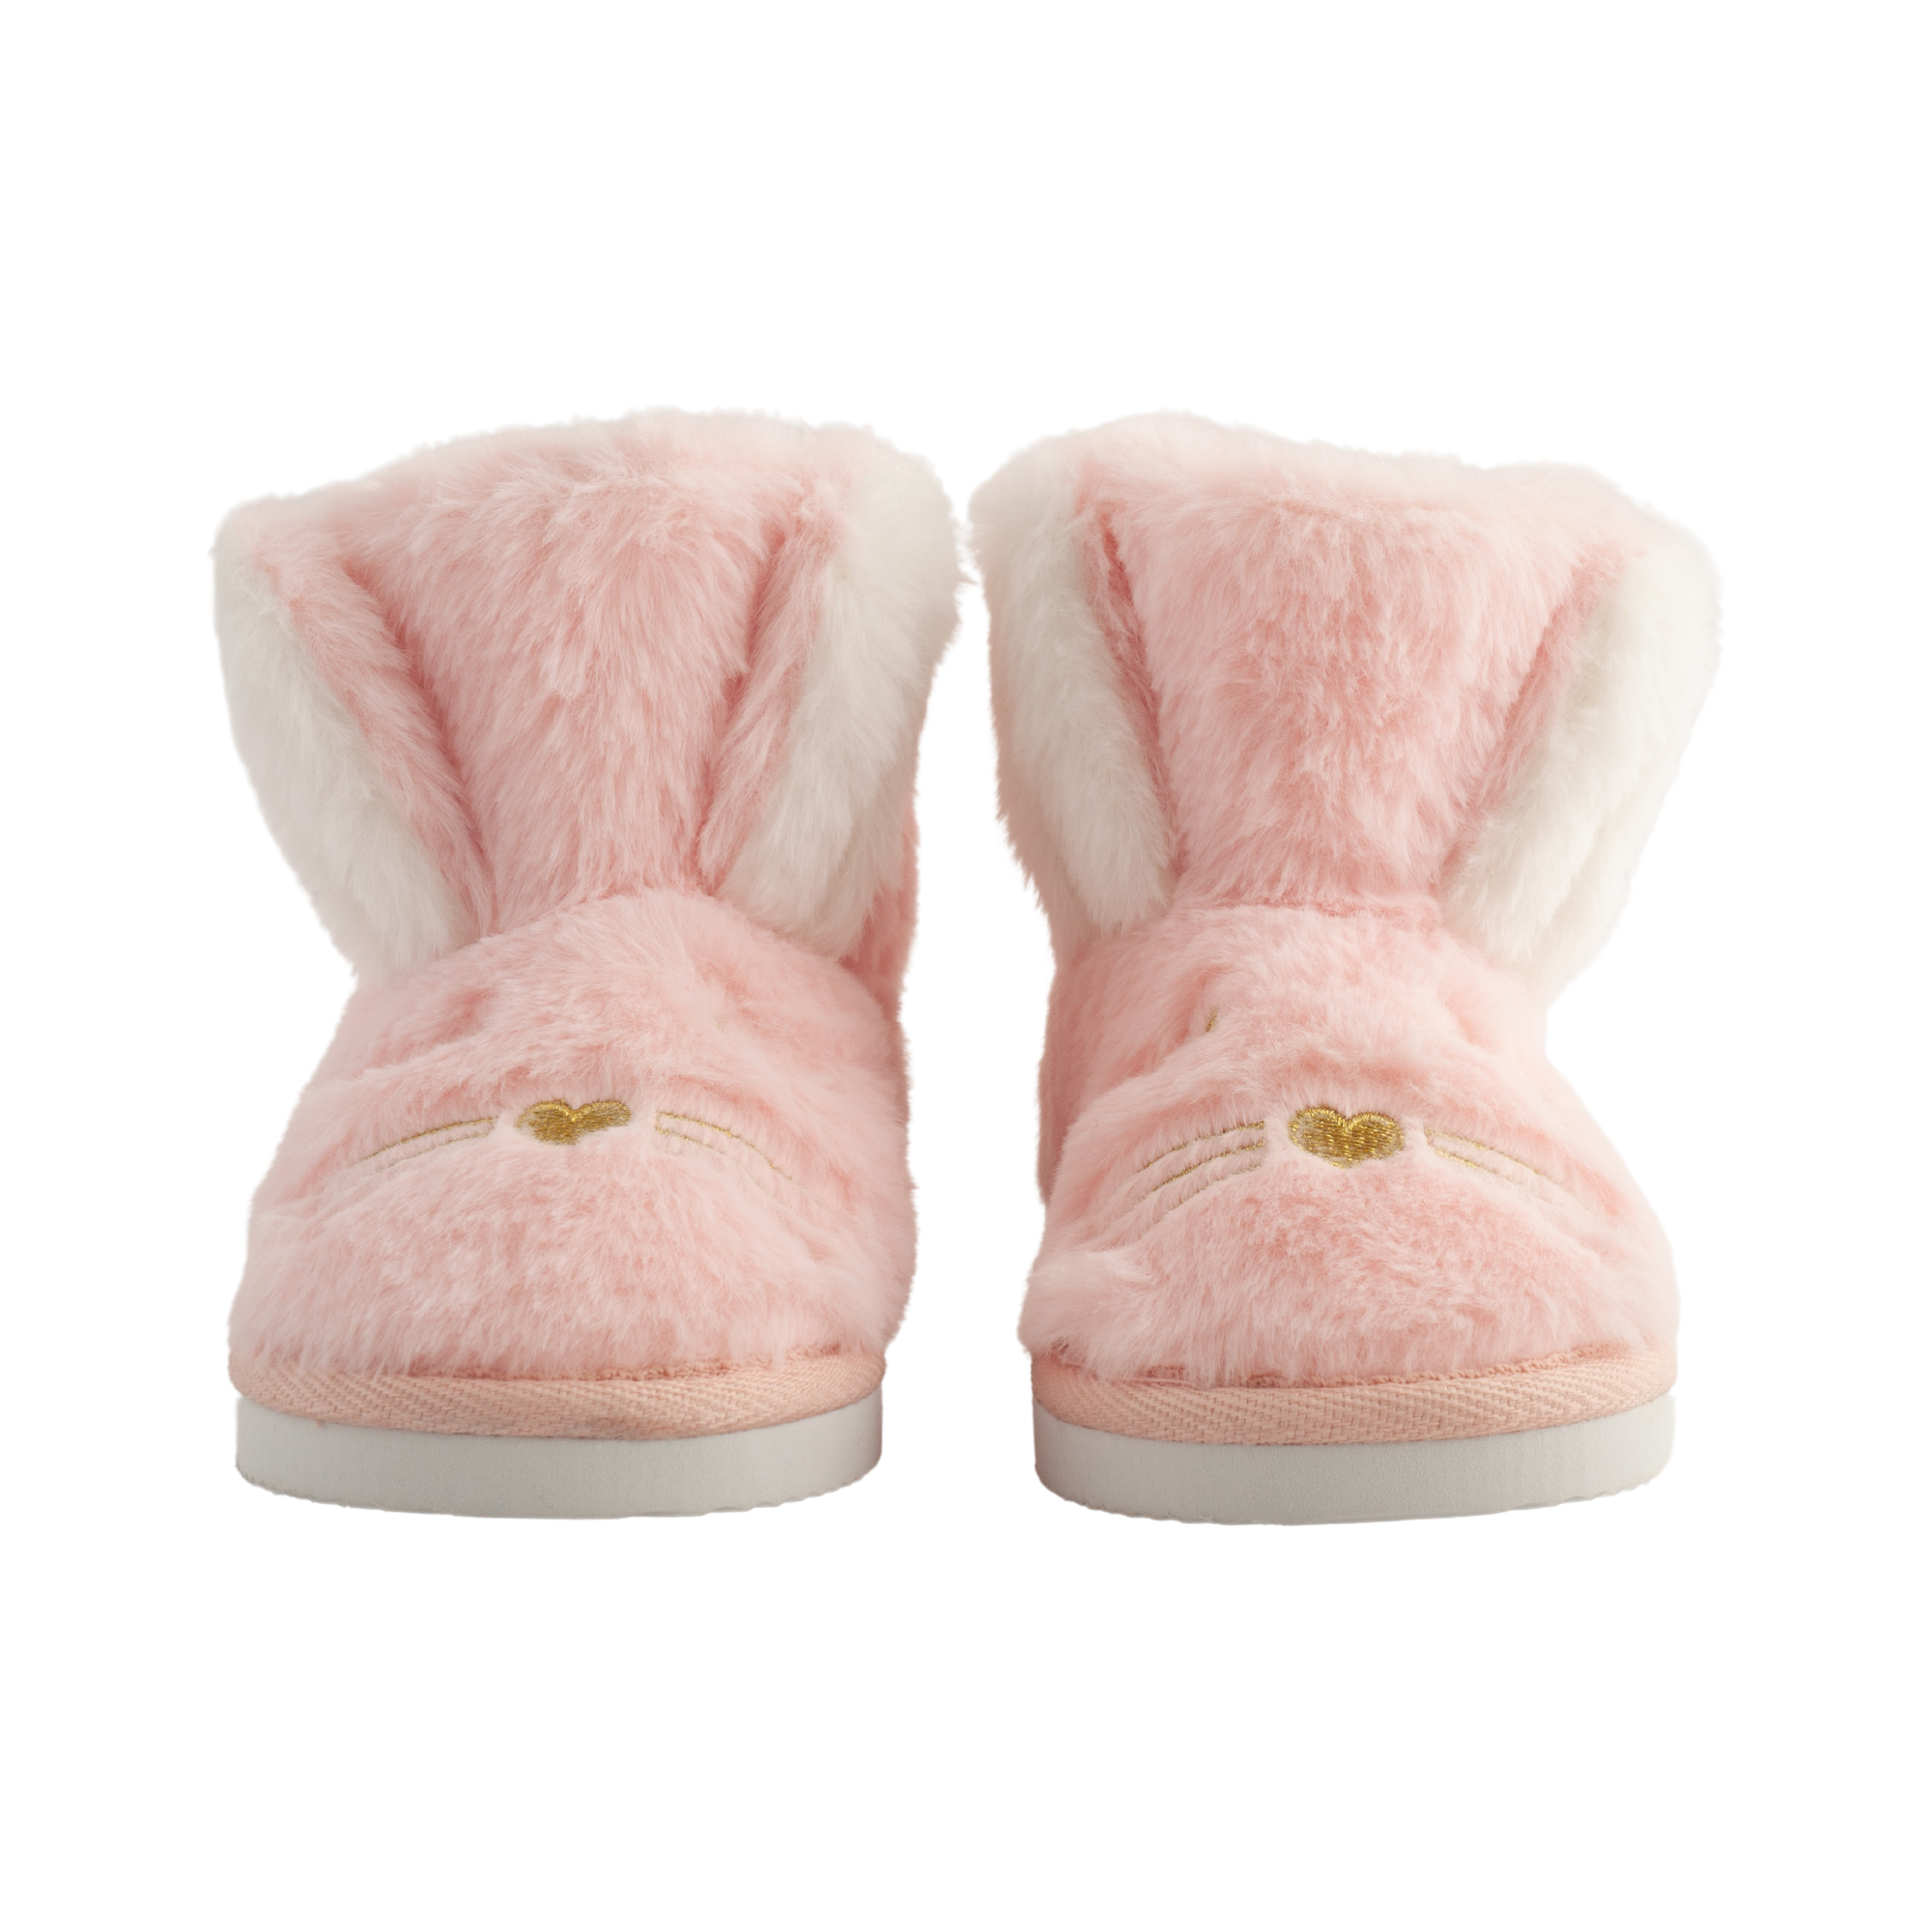 Novelty Slipper Boot - Pink Bunny Size 5-6